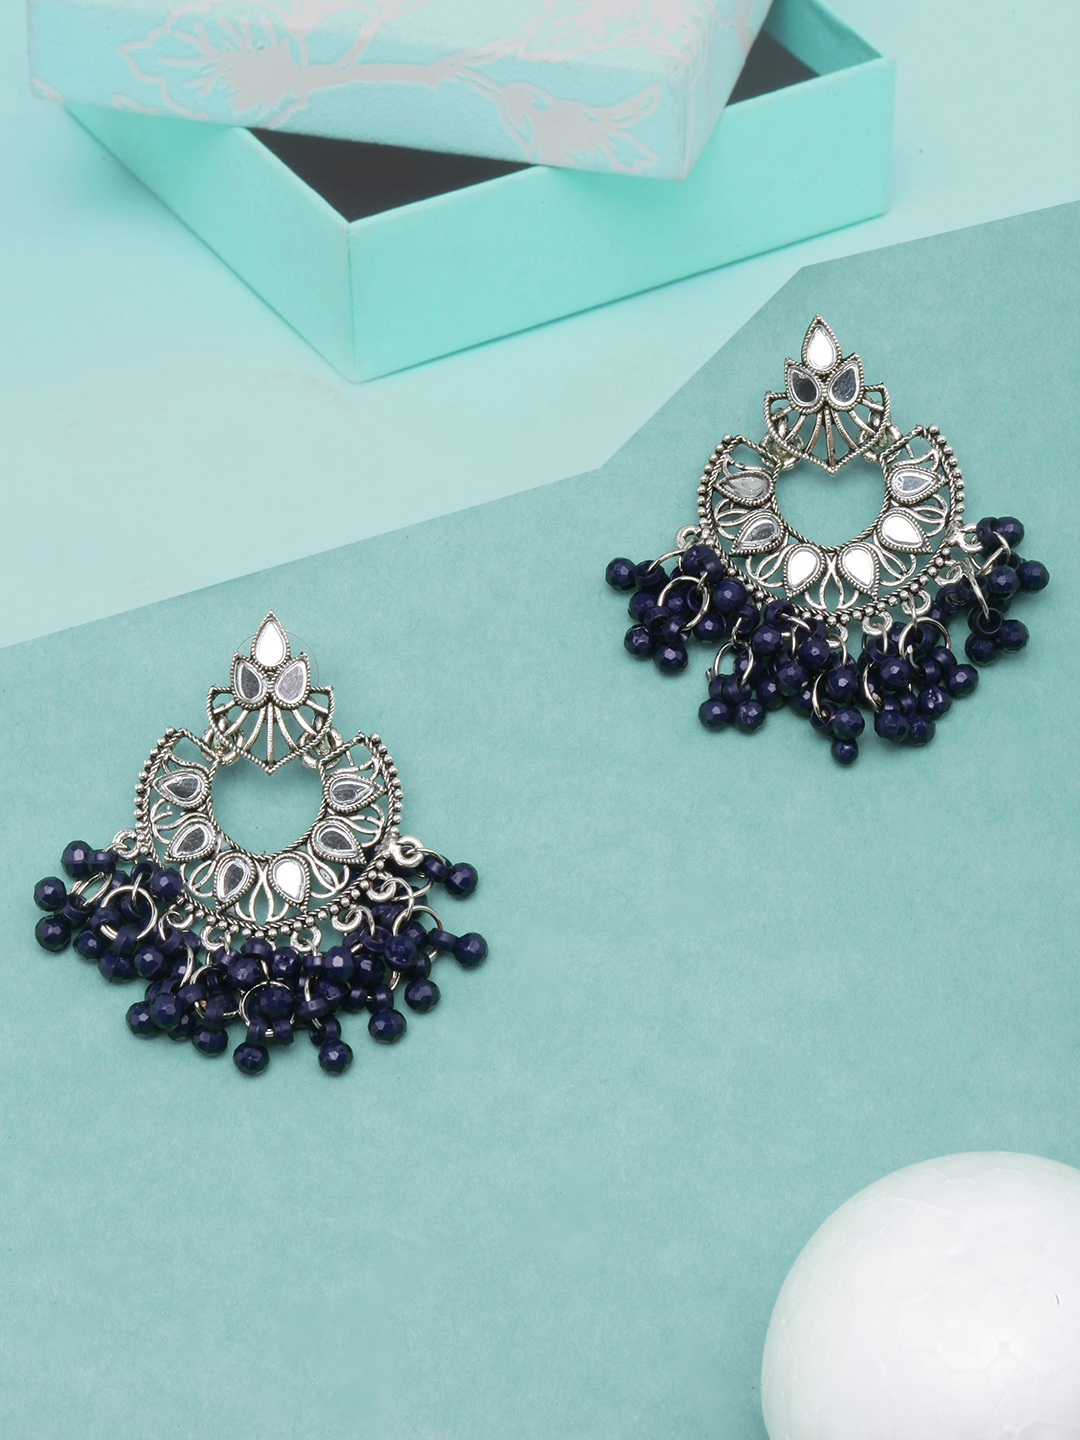 Buy Blue Earrings Online in India at Blingvine